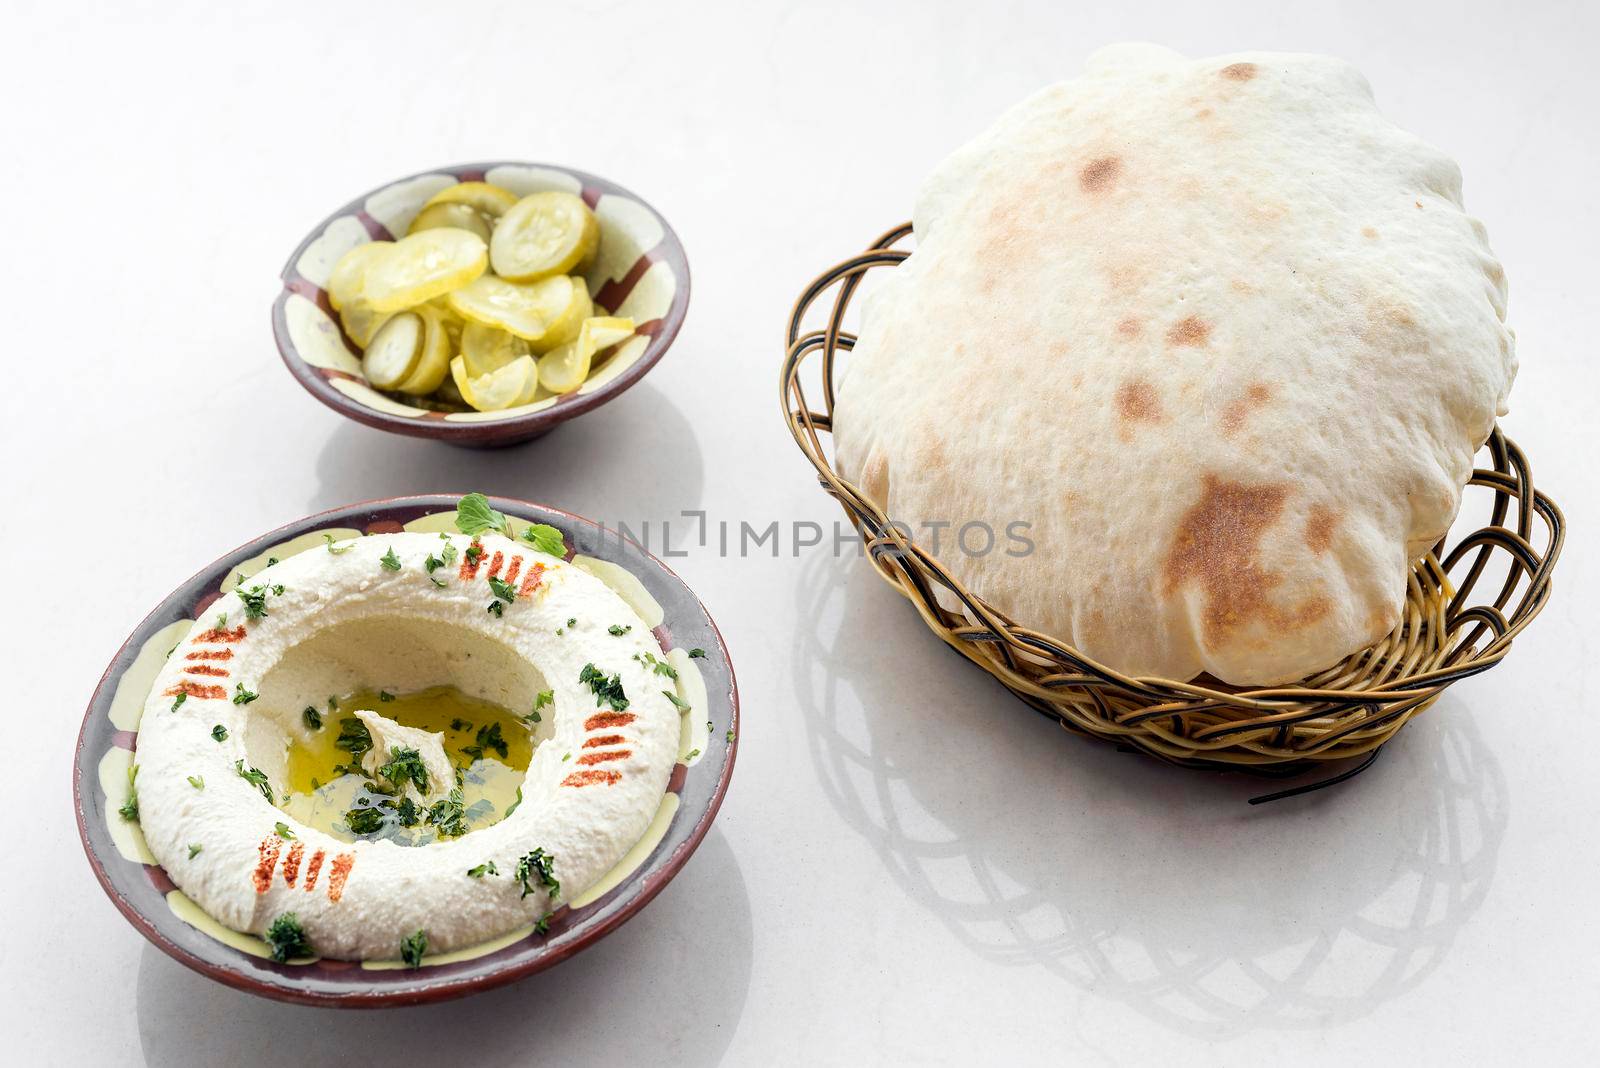 bowl of fresh organic hummus lebanese side dish on white table